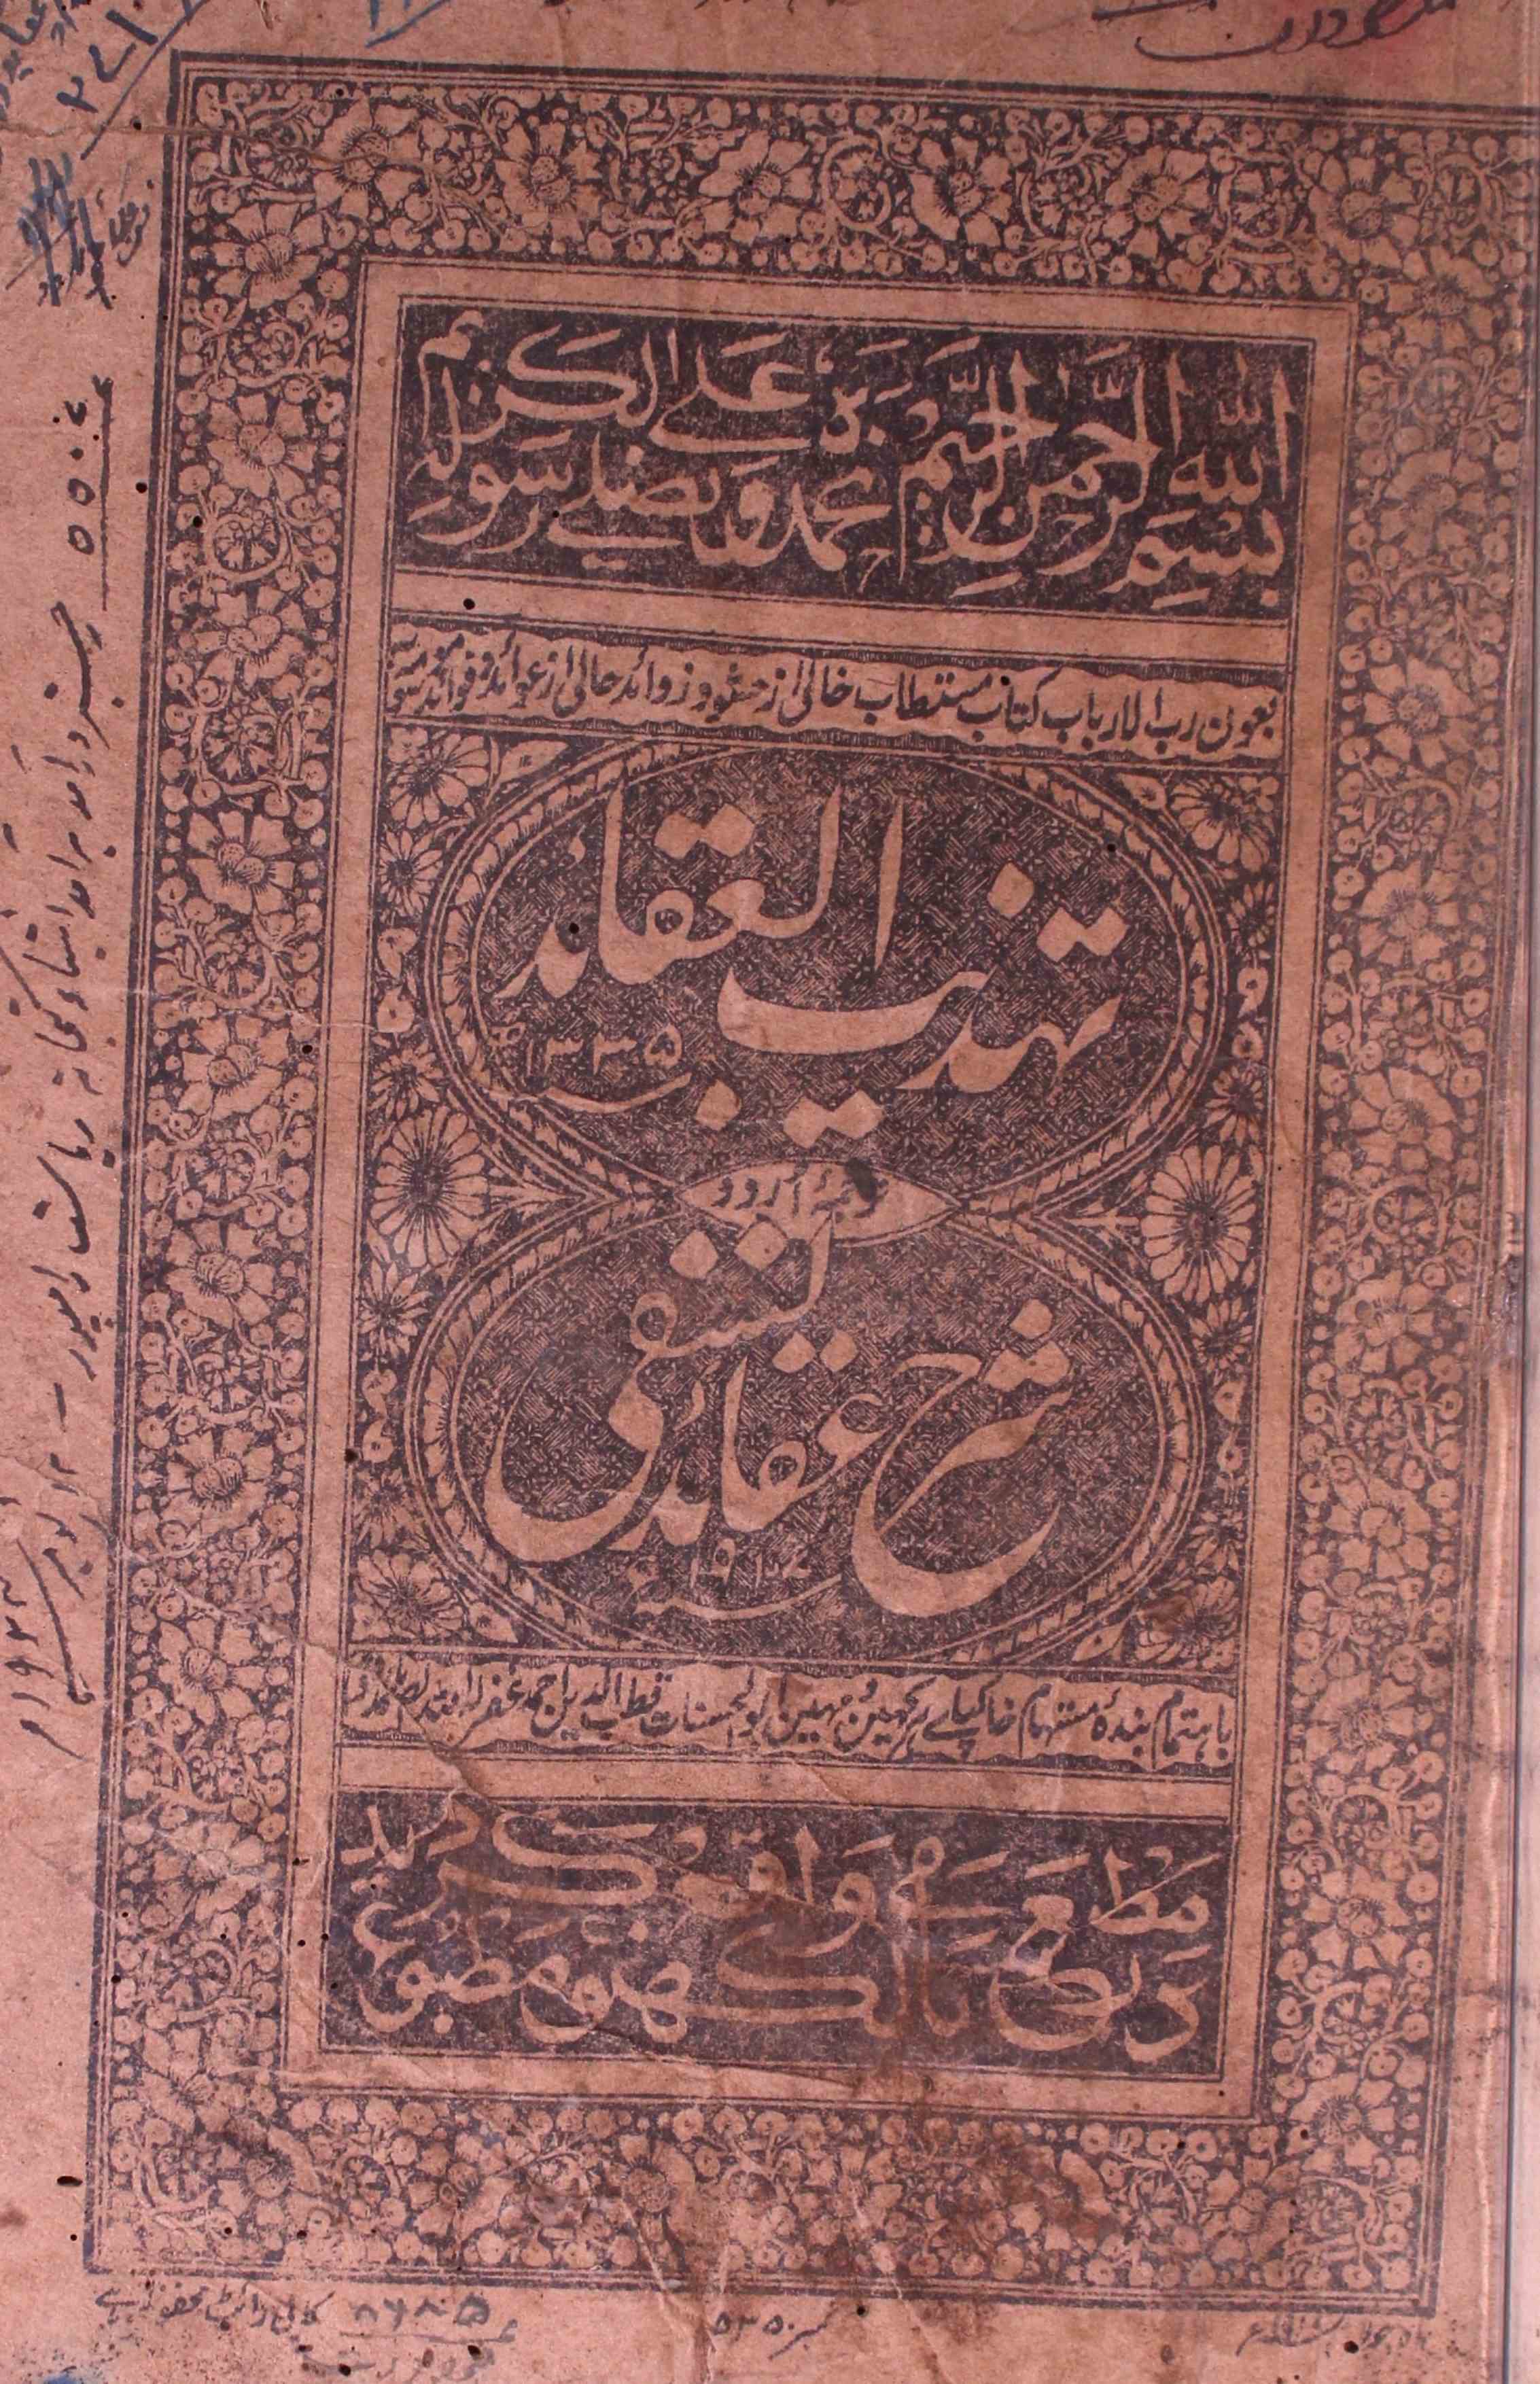 tehzeeb-ul-aqaid